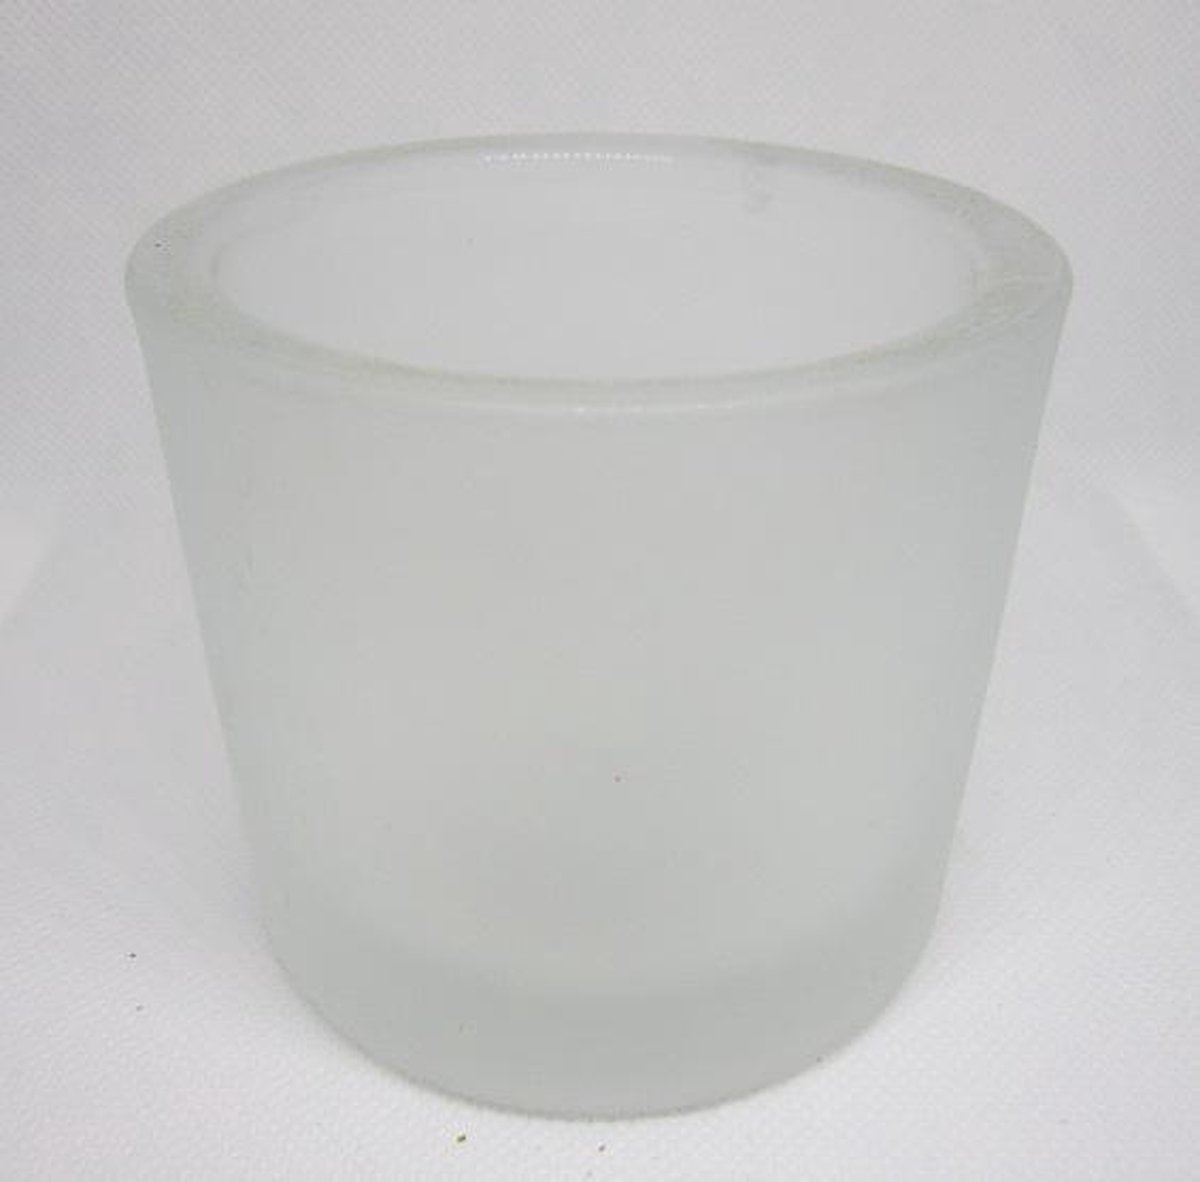 waxinelichthouder, set van 2 stuks, dik glas, mat wit - frosted, 8 x 9 cm Ø  | bol.com